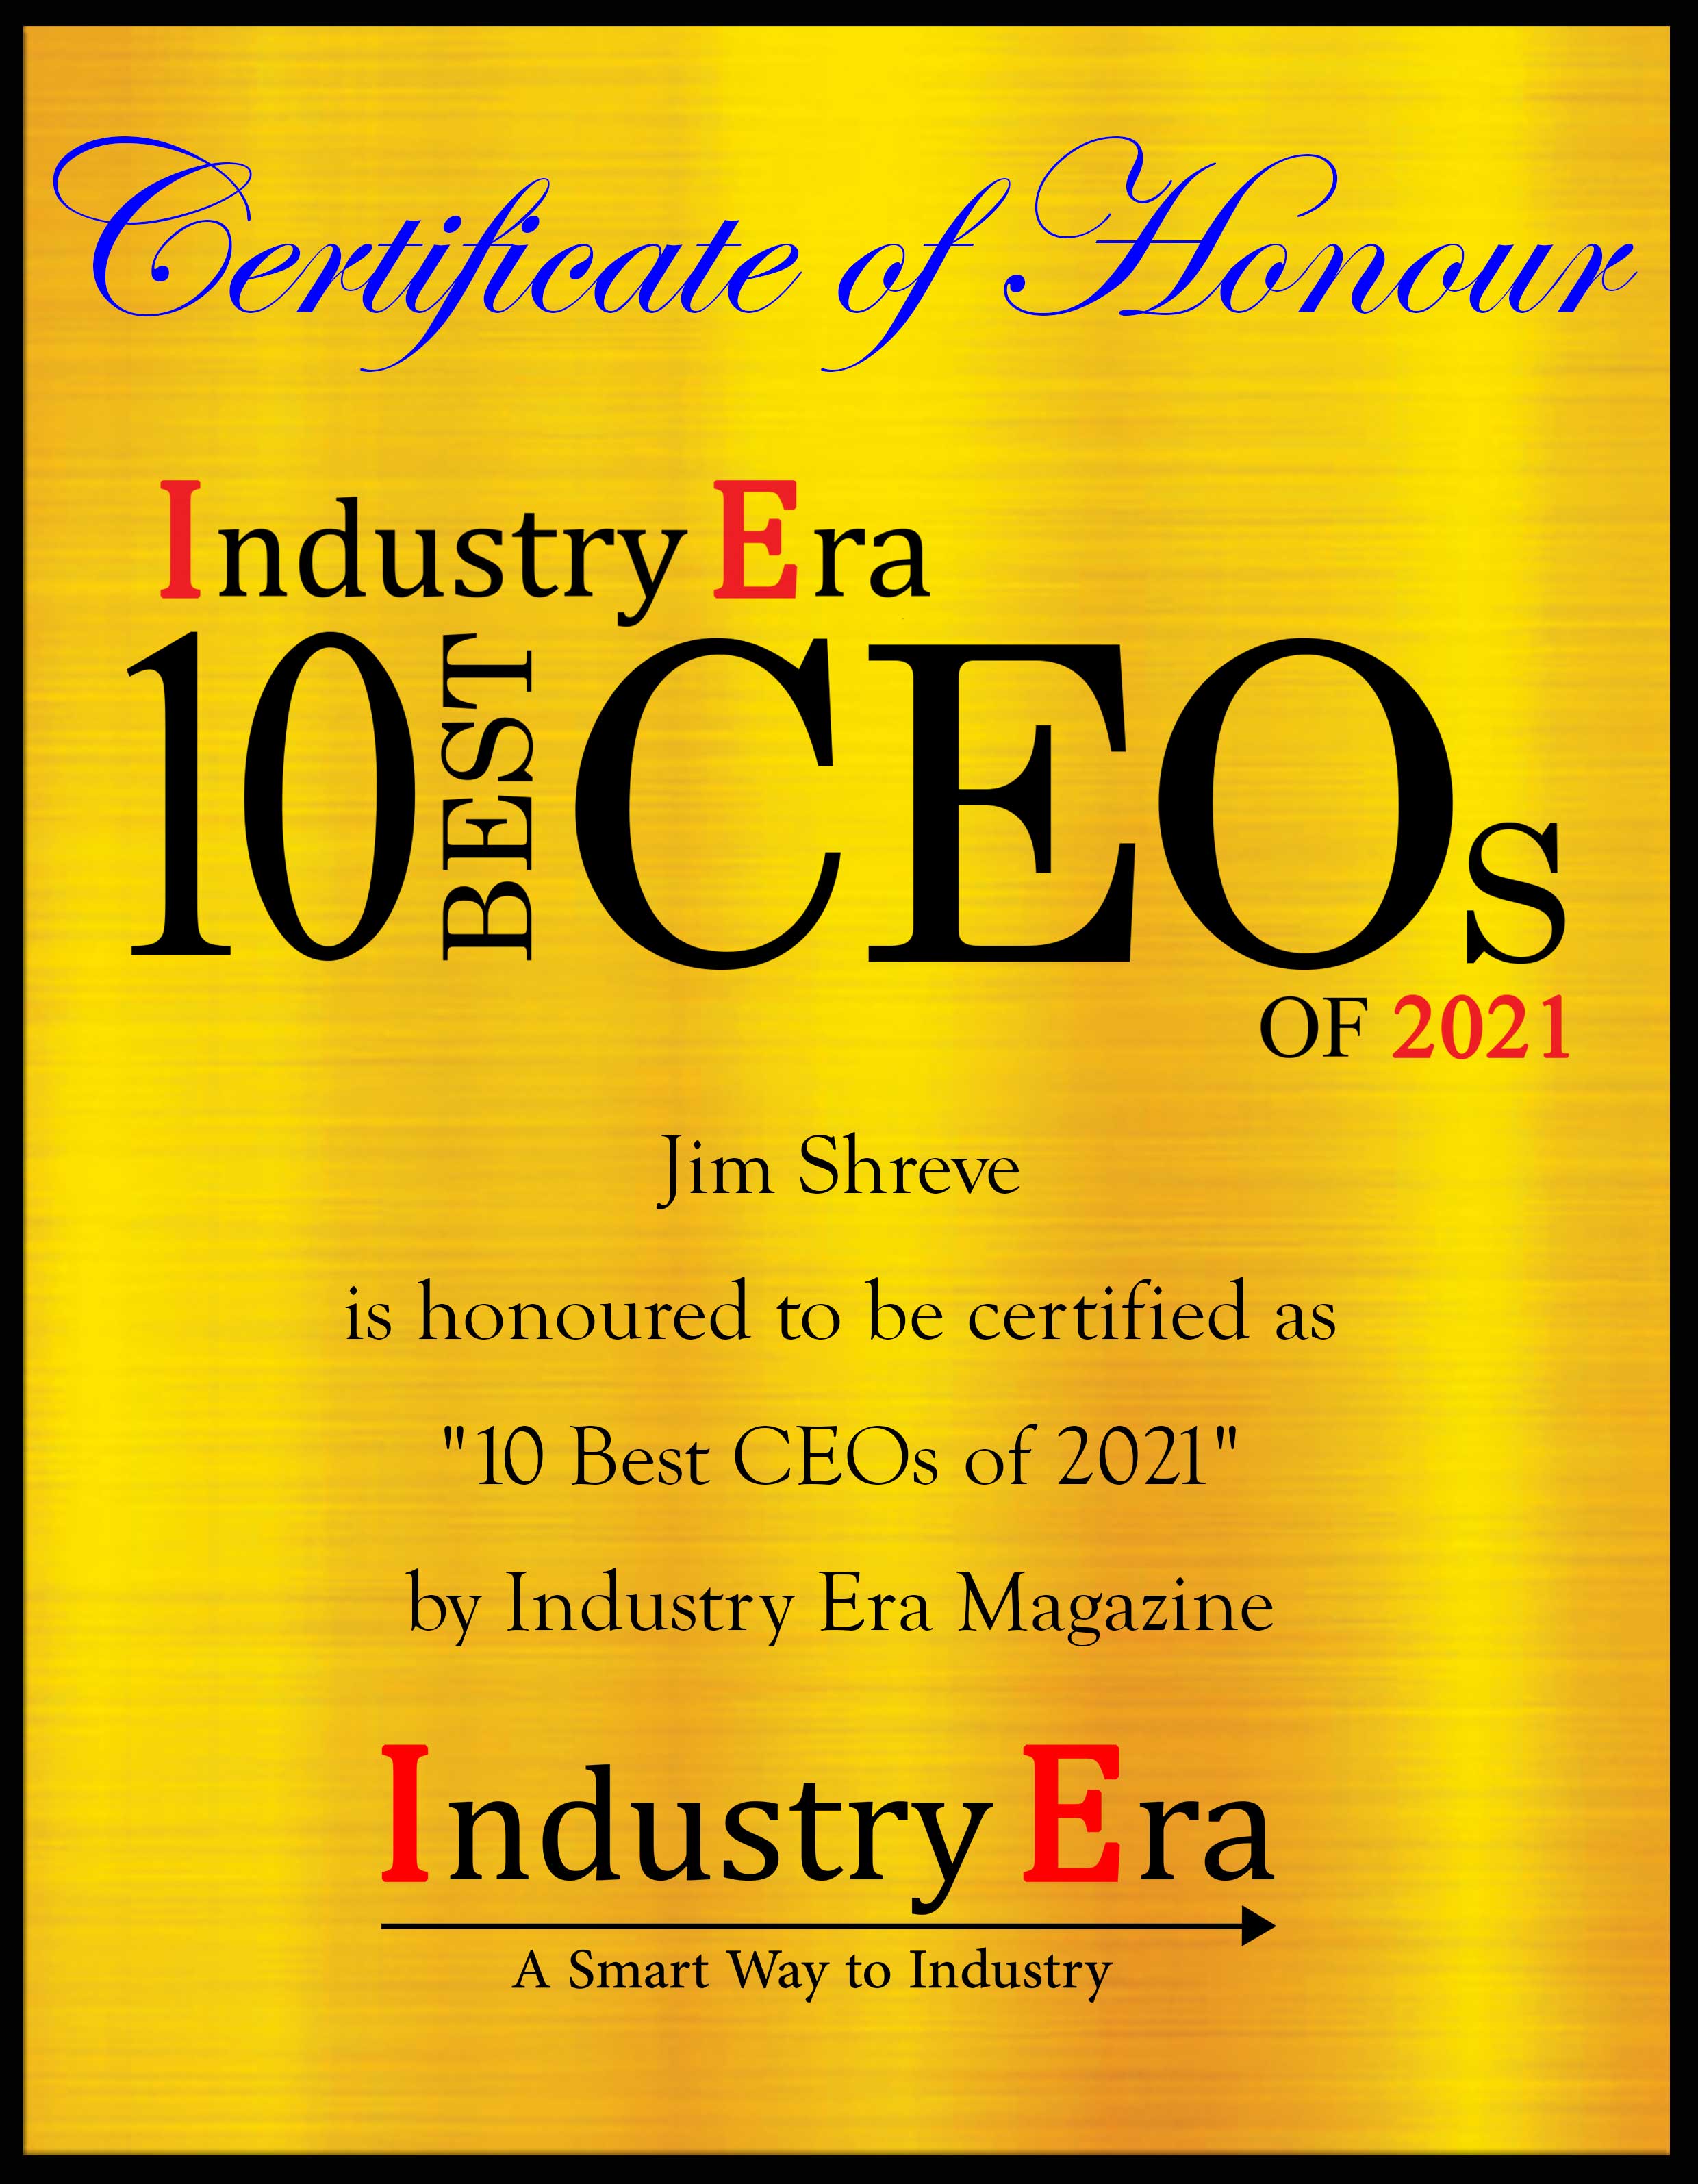 Jim Shreve, President & CEO of Baccarat Certificate